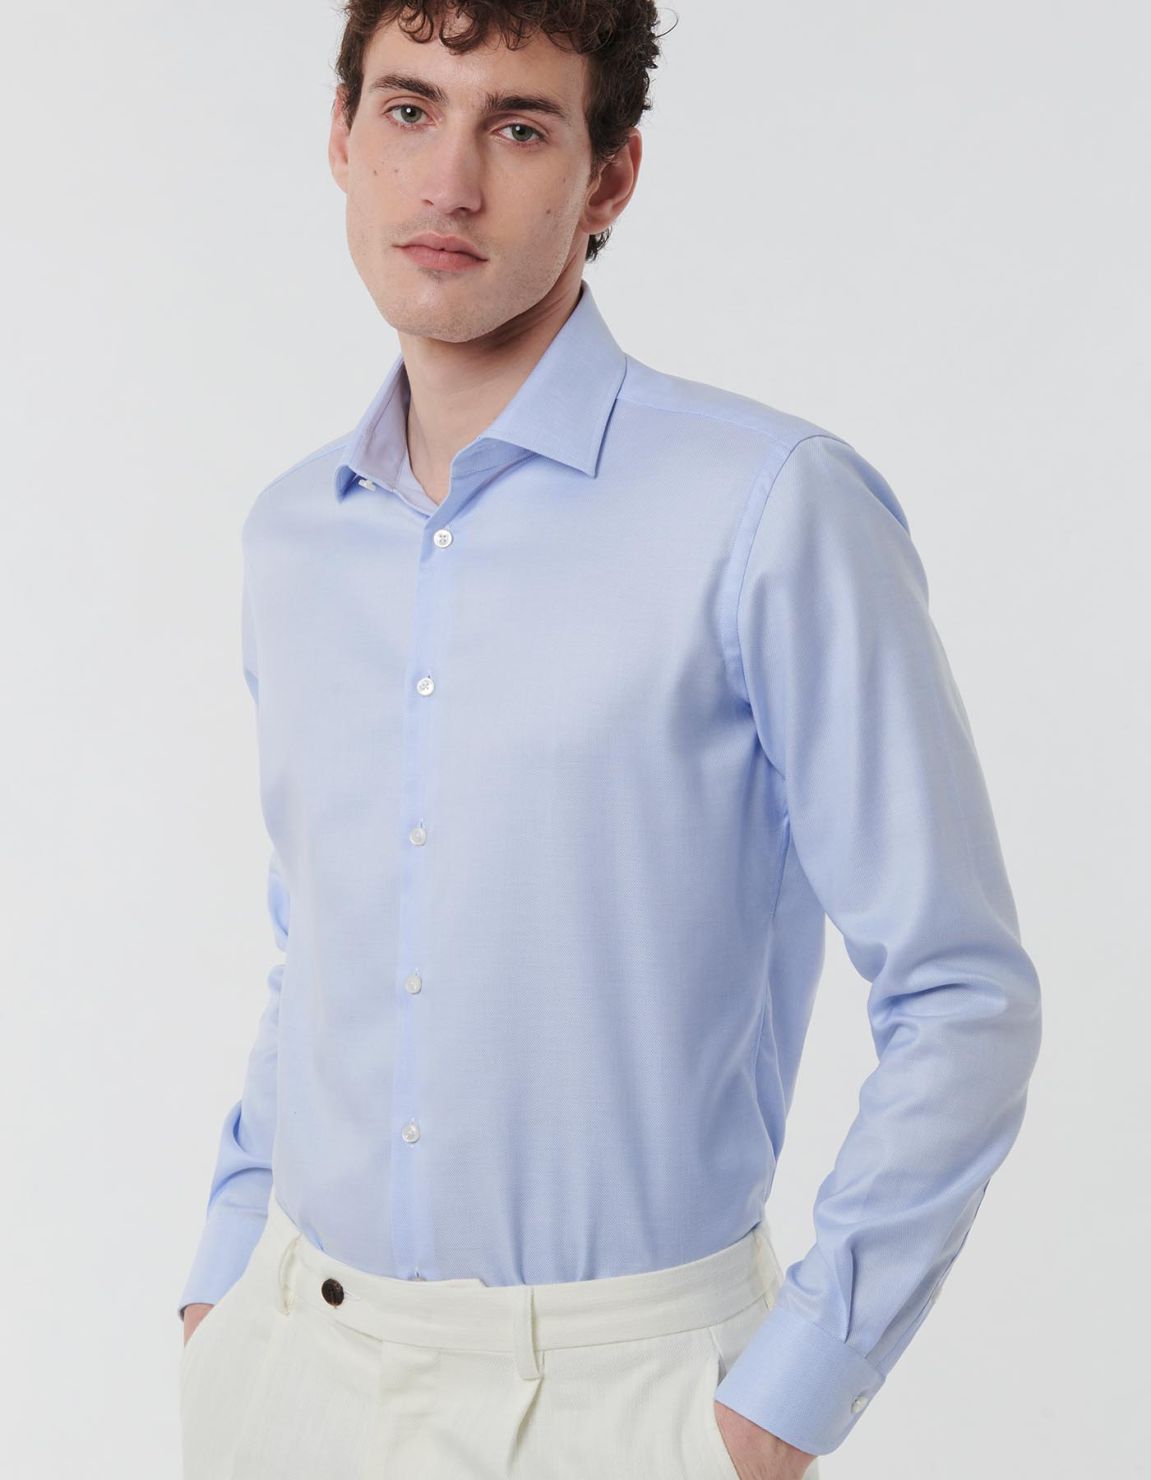 Blue Textured Pattern Shirt Collar spread Tailor Custom Fit 3